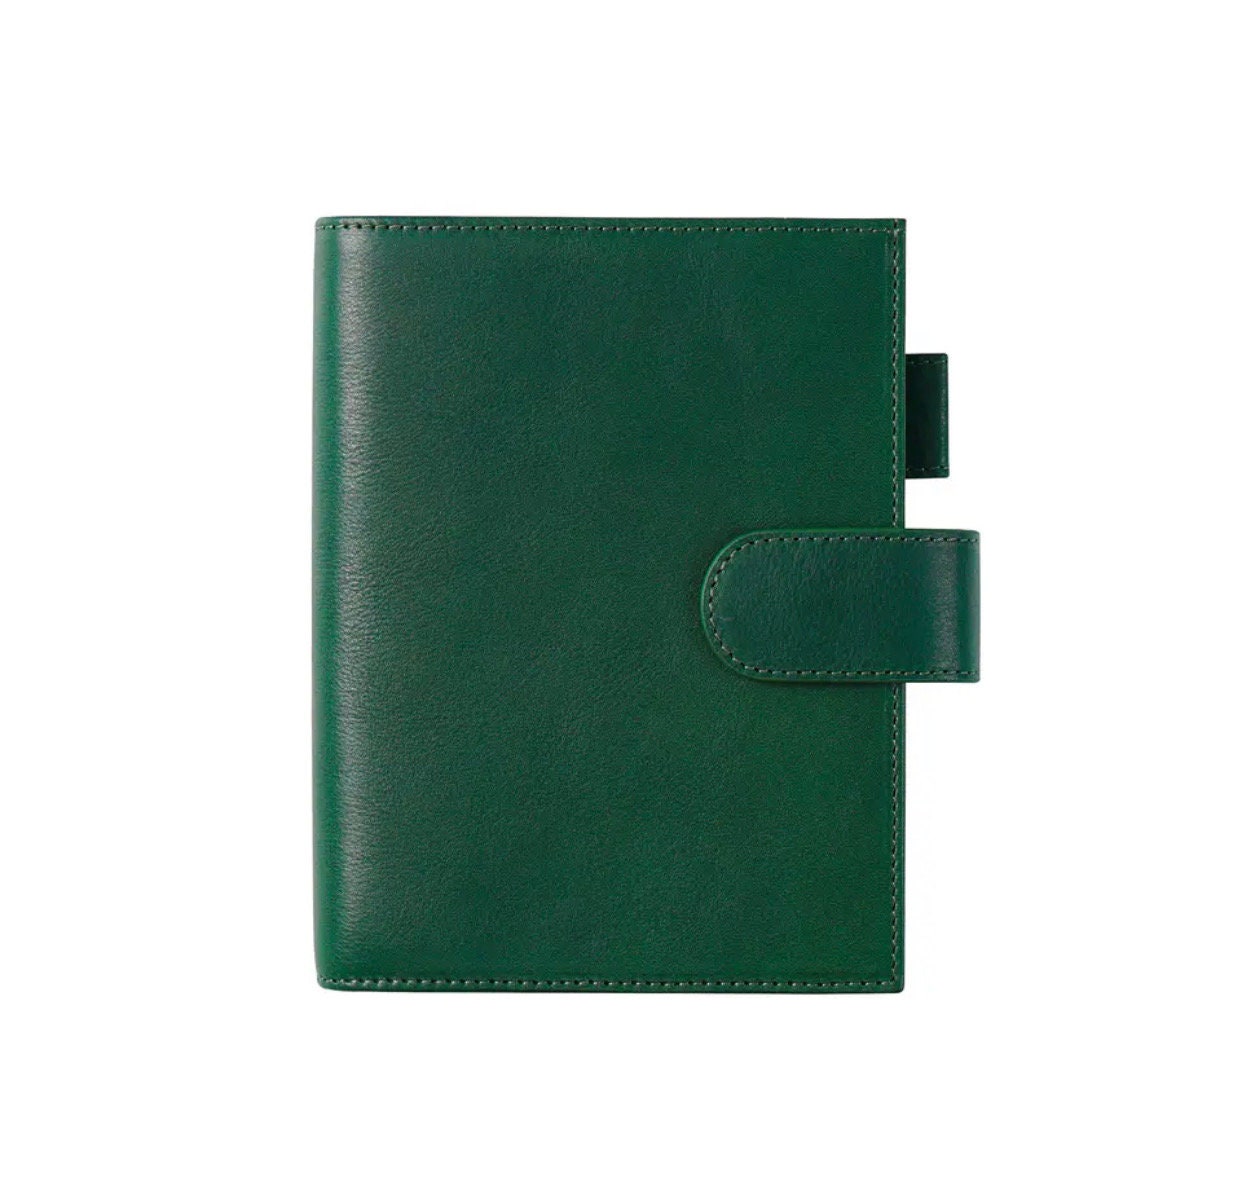 Moterm B6 Plus Genuine Leather B6 Journal Cover Planner Agenda